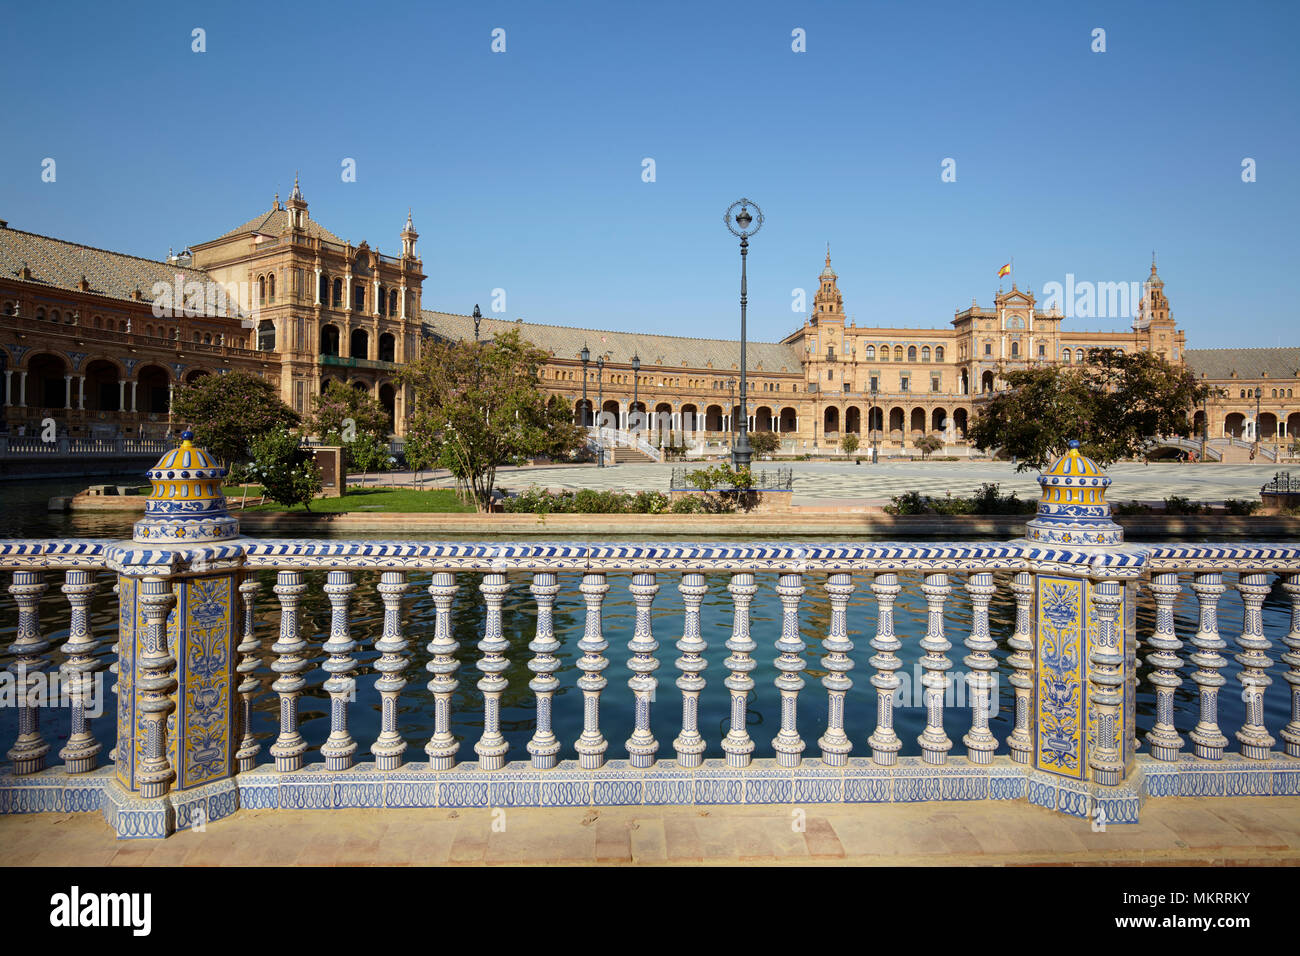 Plaza de España (Spanien Platz) in Sevilla, Spanien Stockfoto